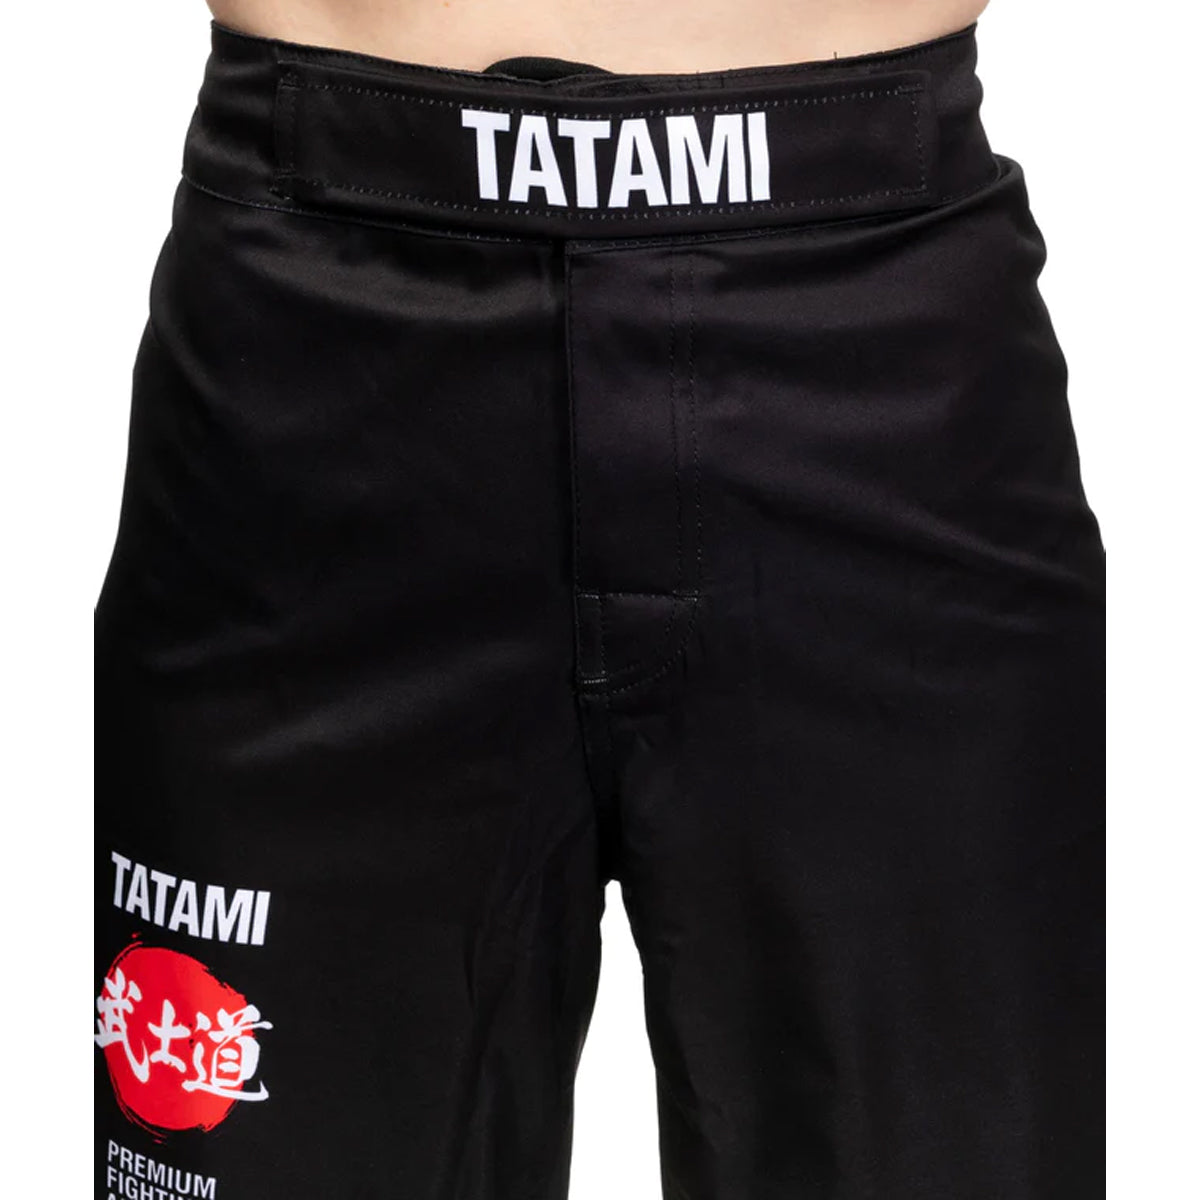 Tatami Fightwear Women's Bushido Grappling Shorts - Black Tatami